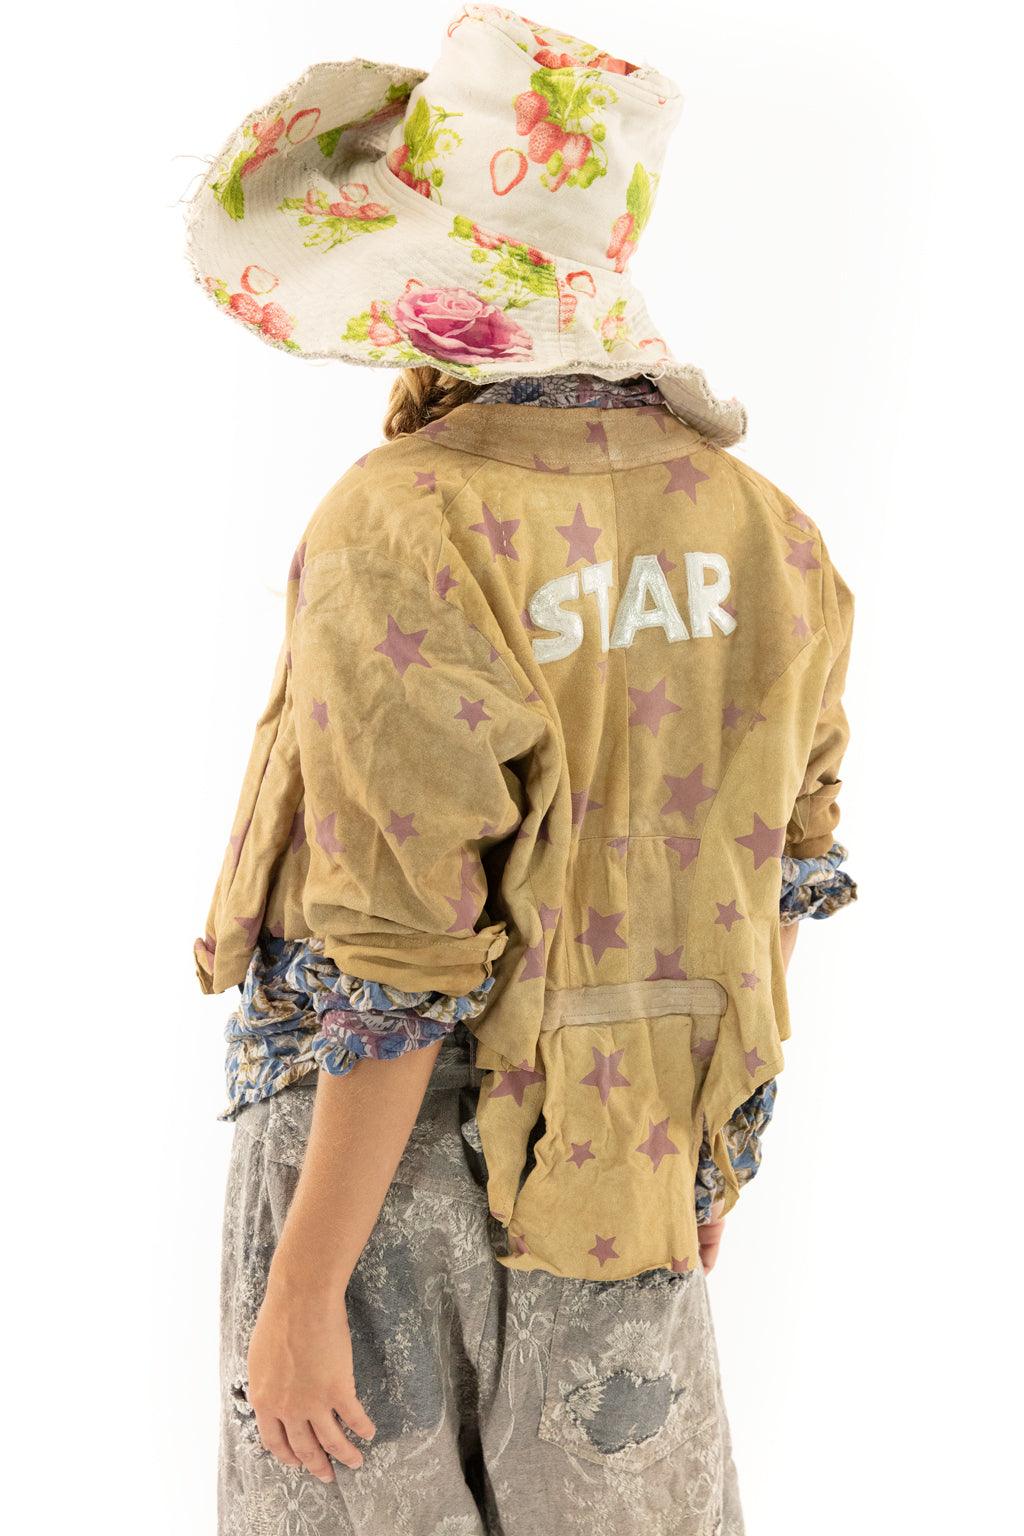 Leather Star Inna Jacket - Magnolia Pearl Clothing